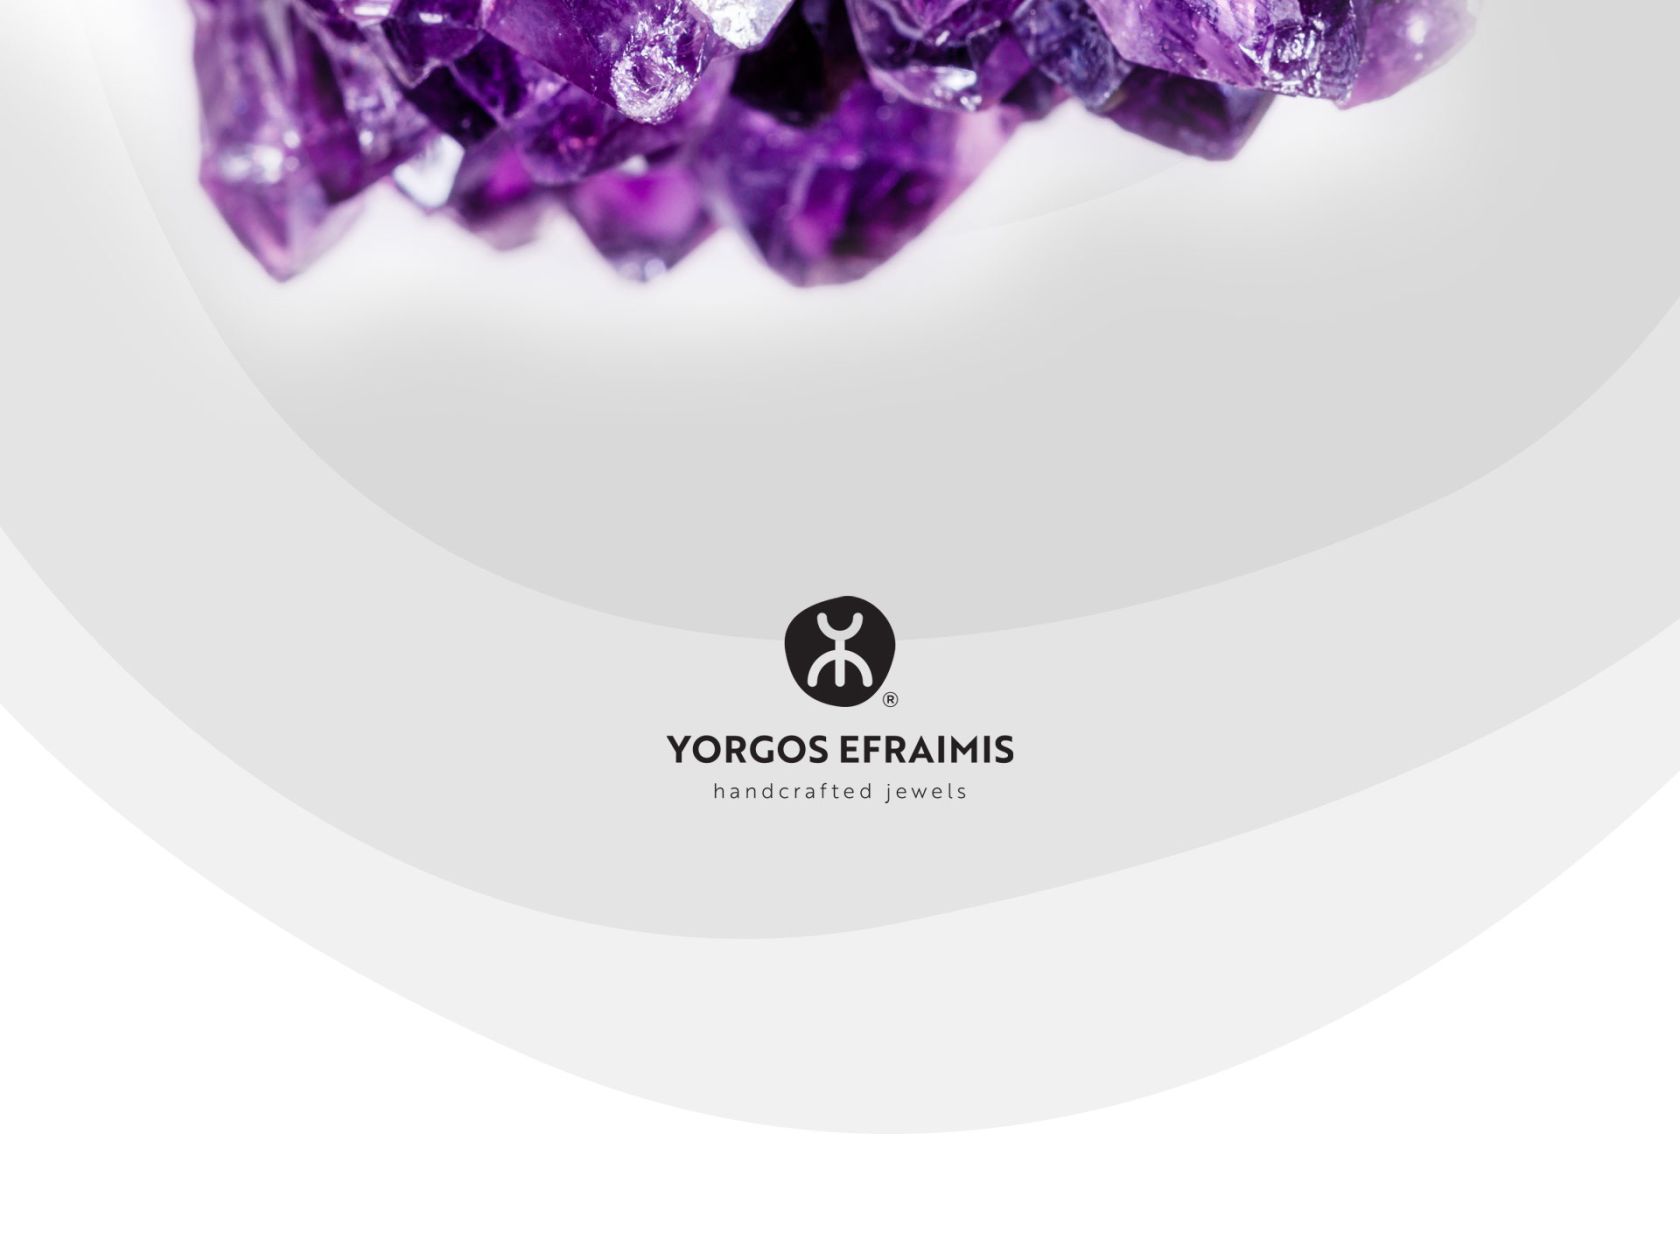 yorgos-efraimis-handcrafted-jewels-web-02